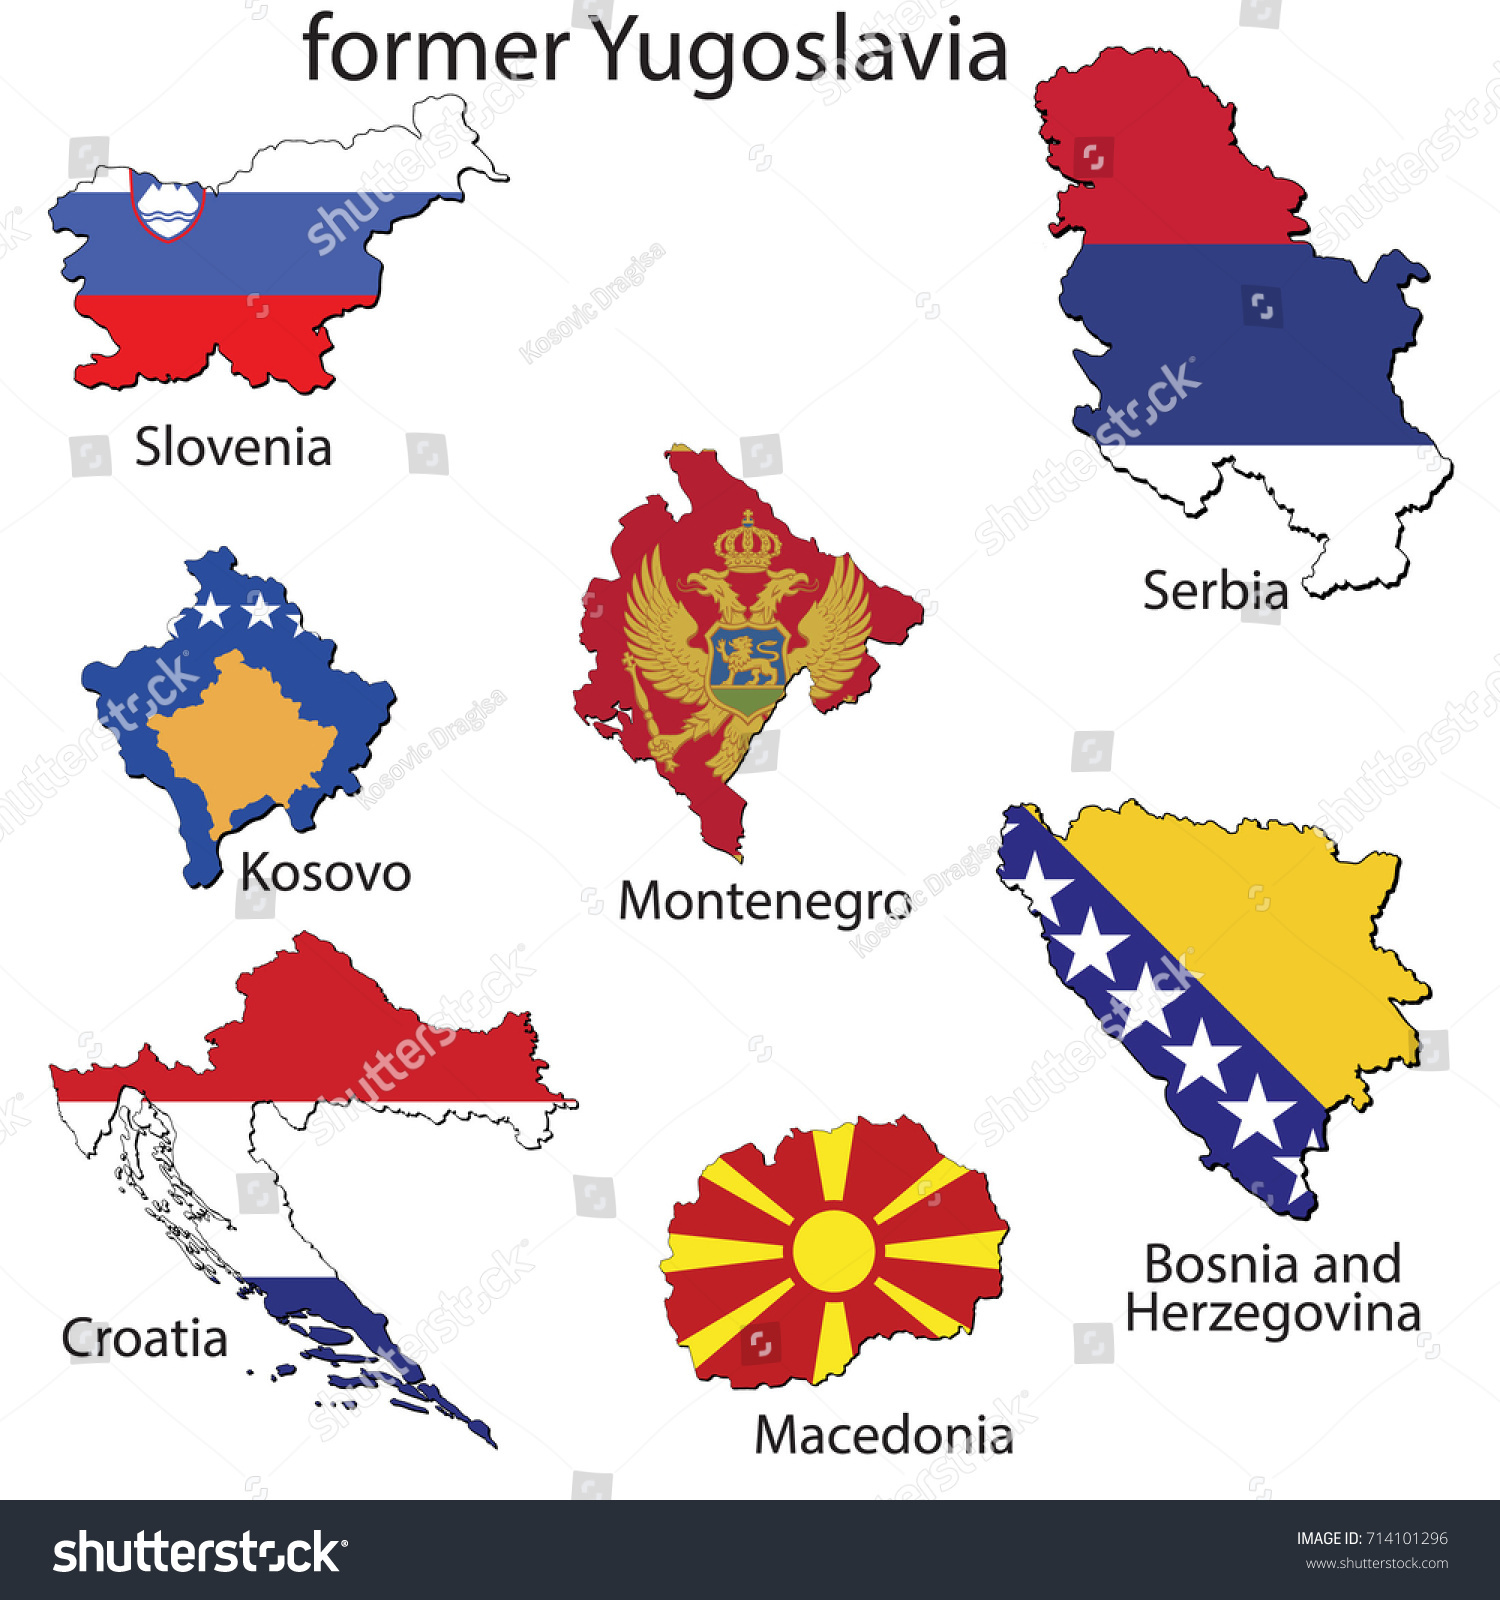 Maps Countries Former Yugoslavia Region Flags: เวกเตอร์สต็อก (ปลอดค่าลิขสิทธิ์) 714101296 | Shutterstock